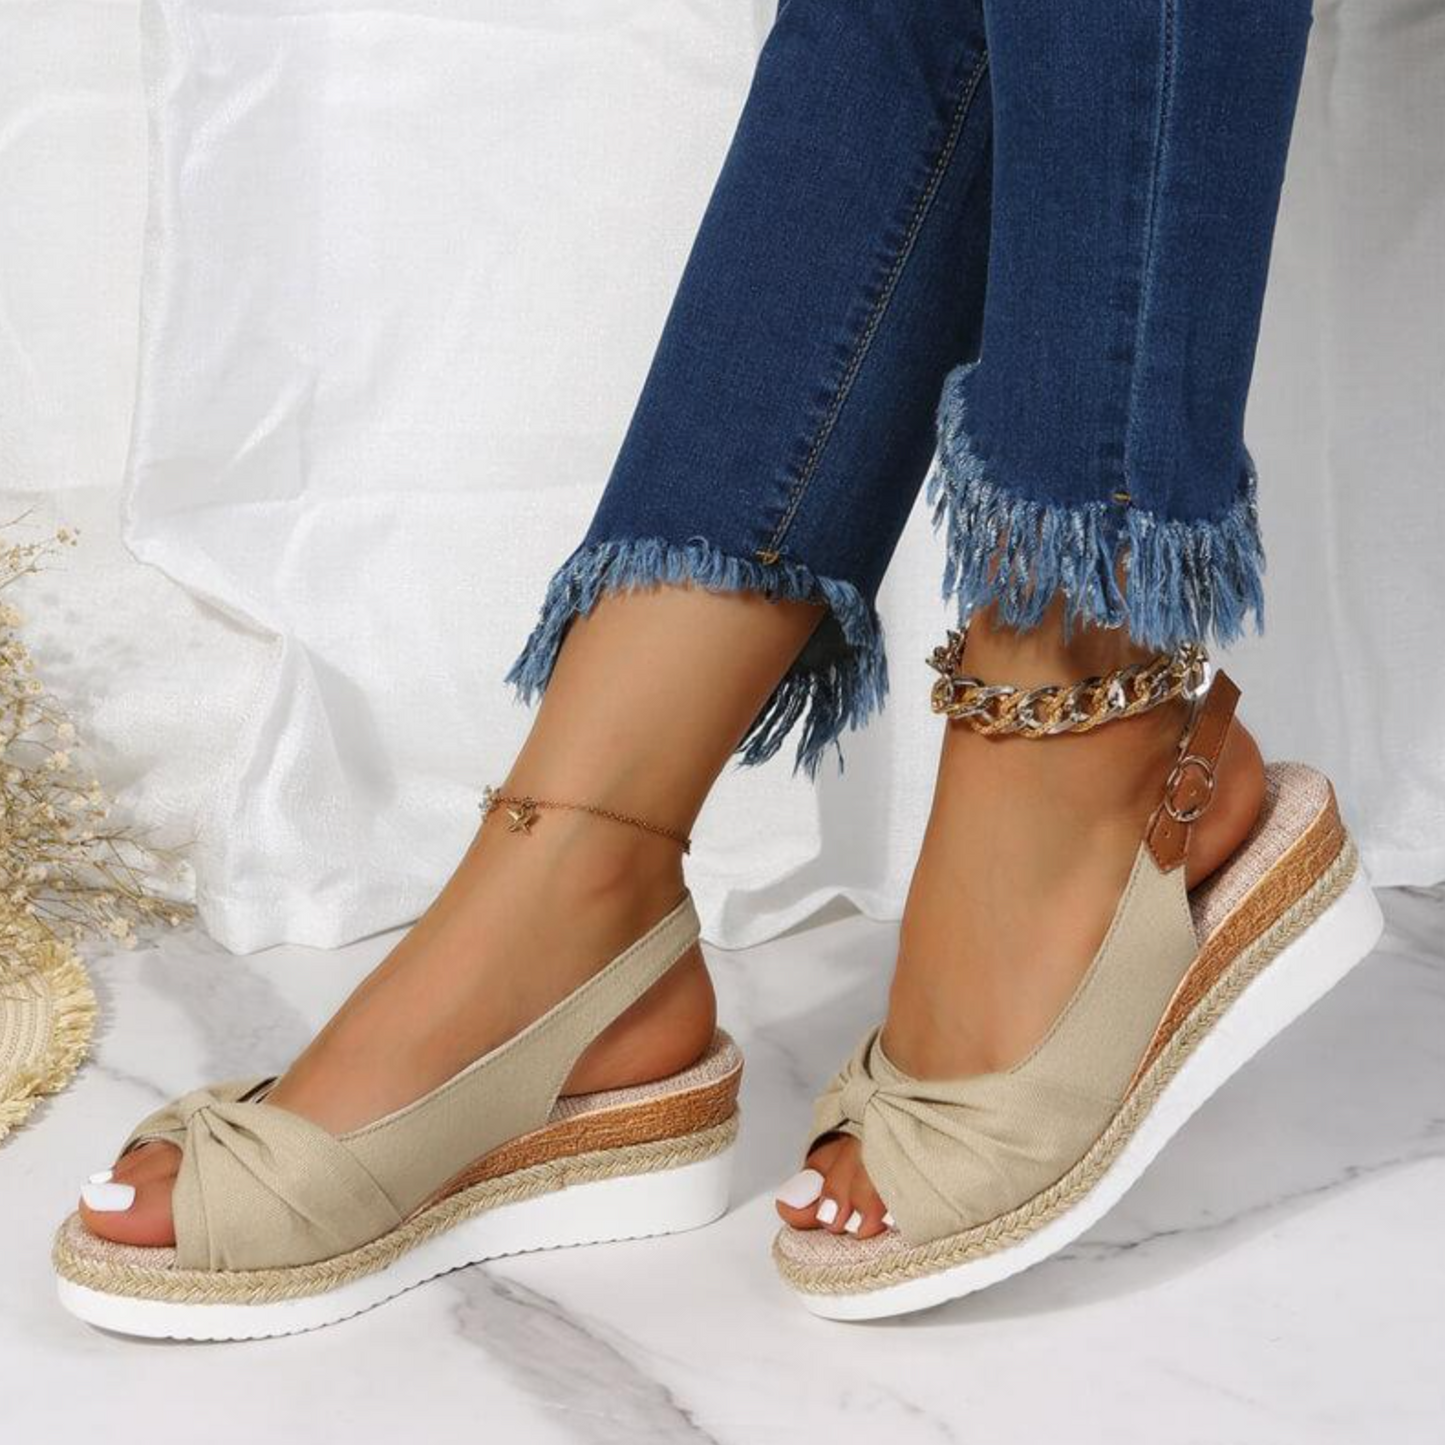 Women's Buckle Peep Toe Wedges Sandals, Comfortable Lightweight Wear-resistant Shoes